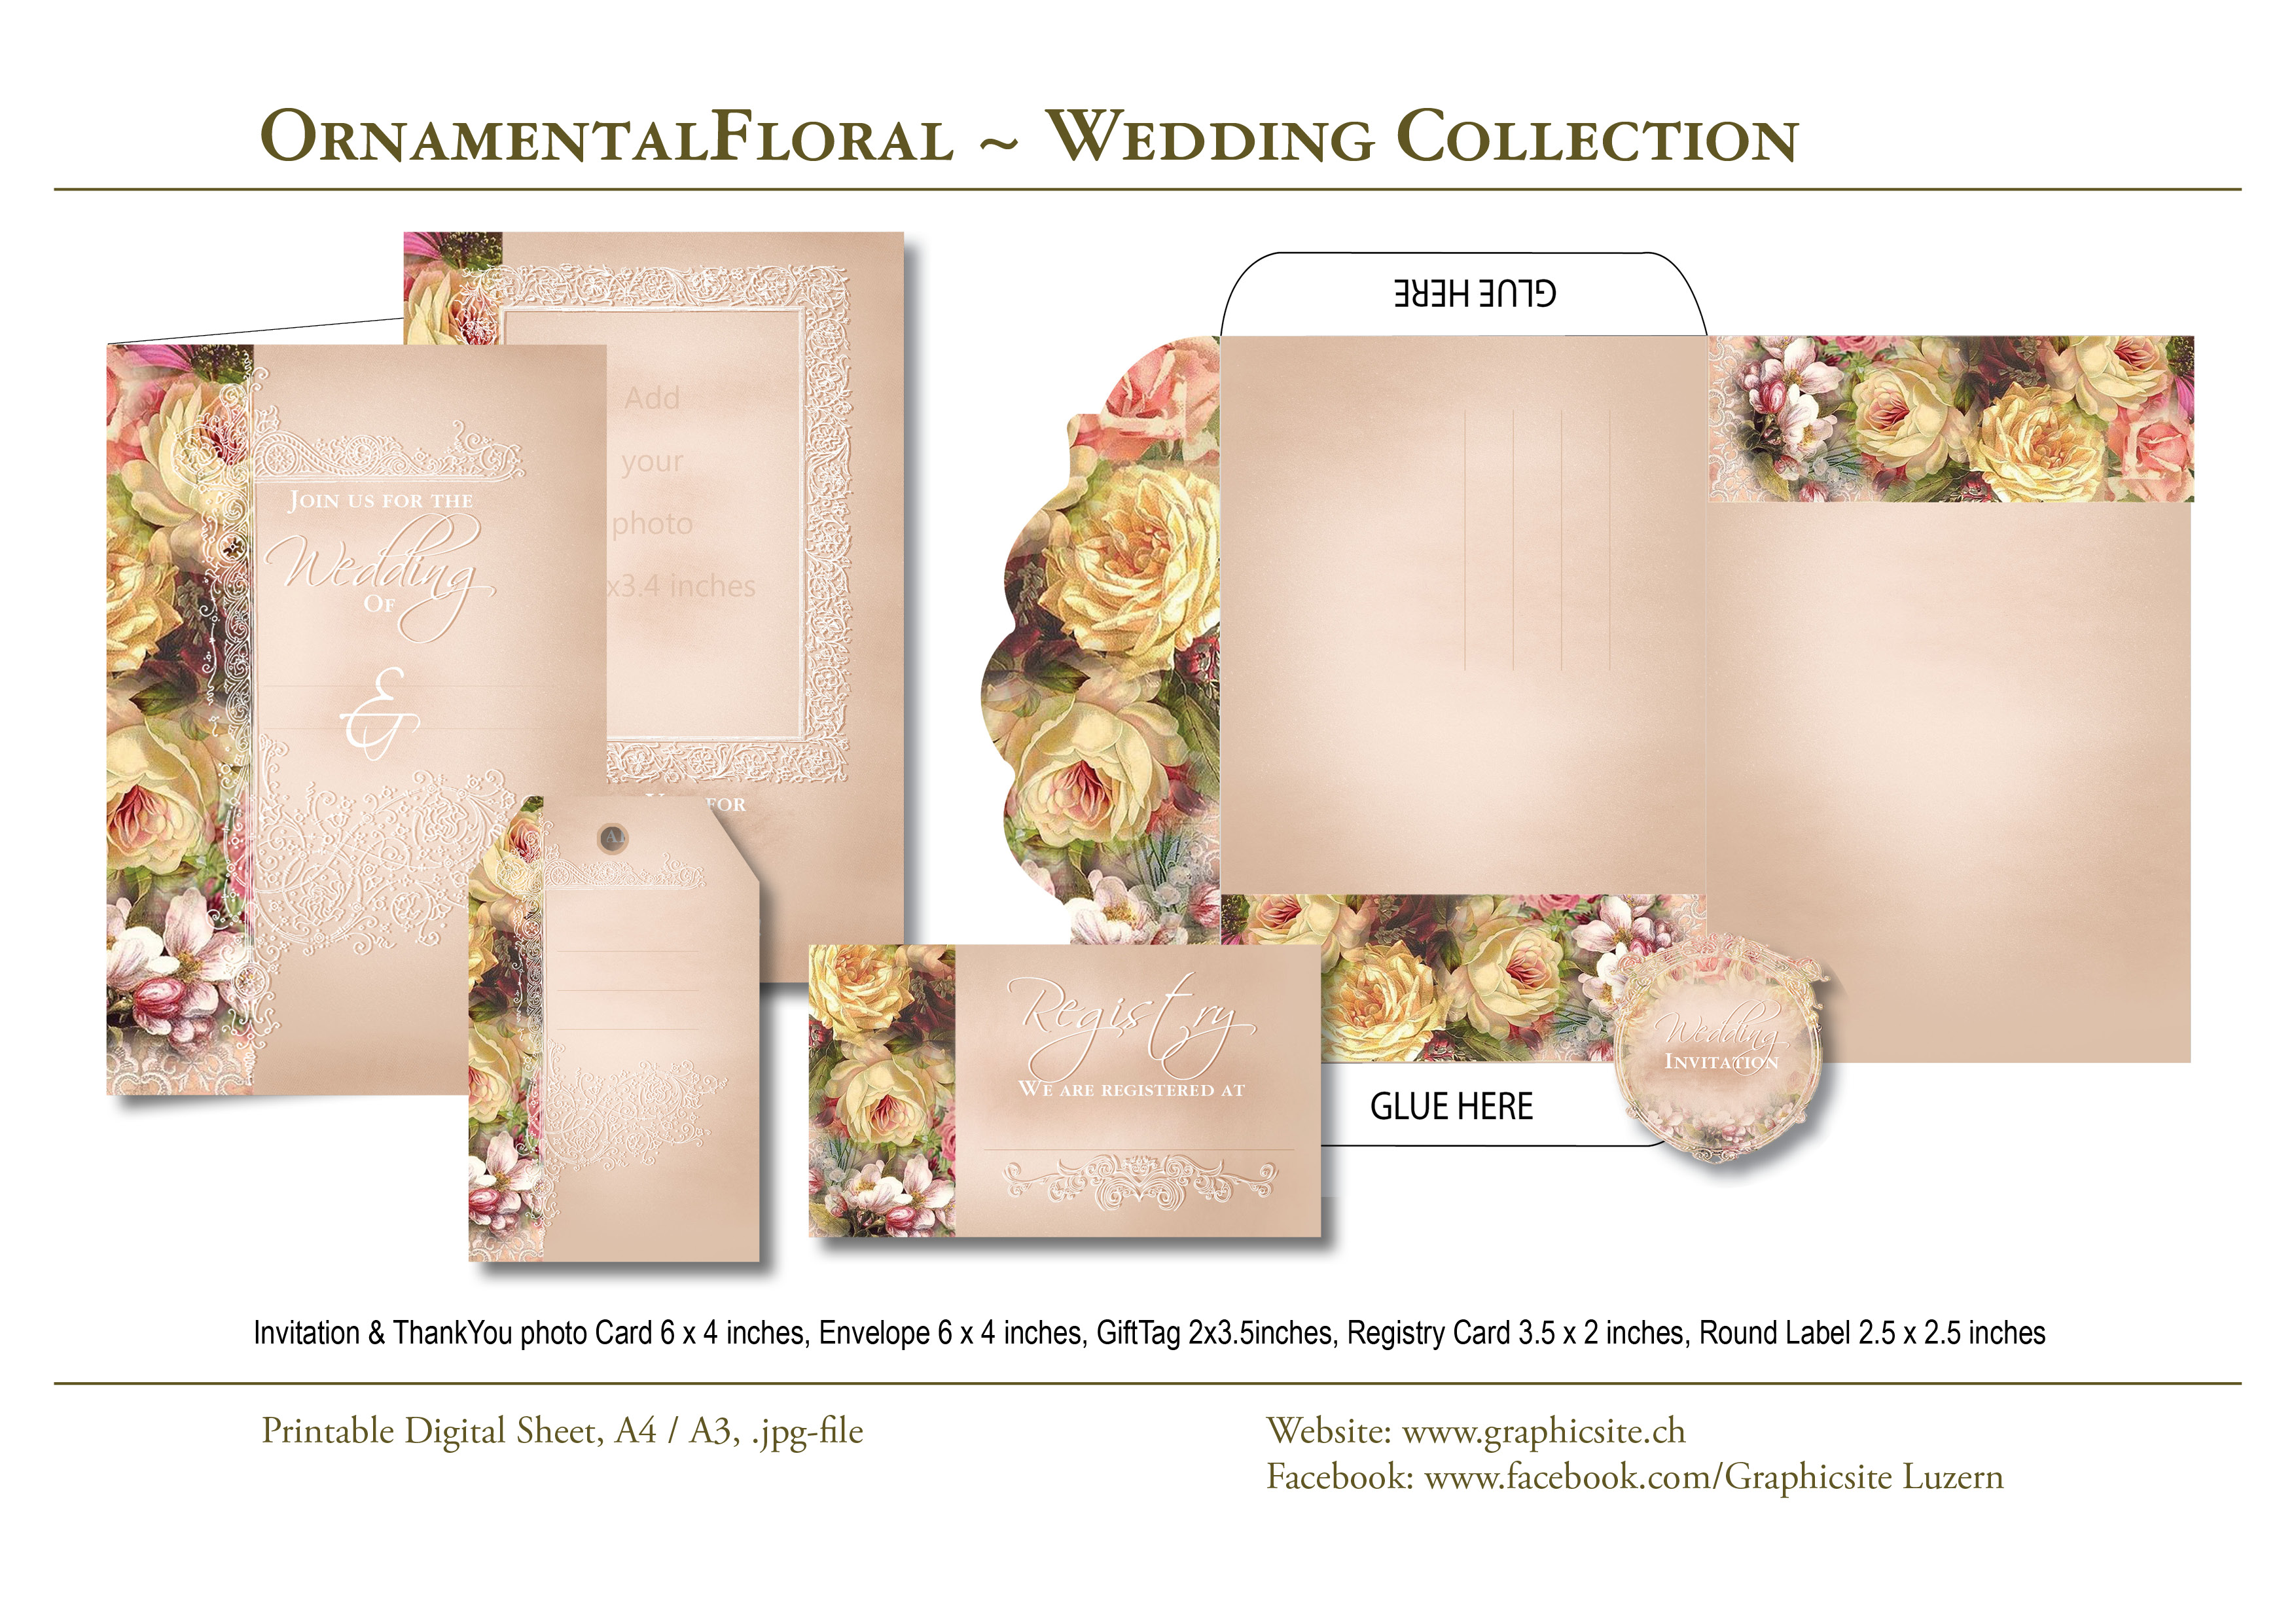 Printable Digital Sheets - Wedding Collection - Ornamental Floral, #wedding, #invitation, #cards, #tags, #envelope, #label